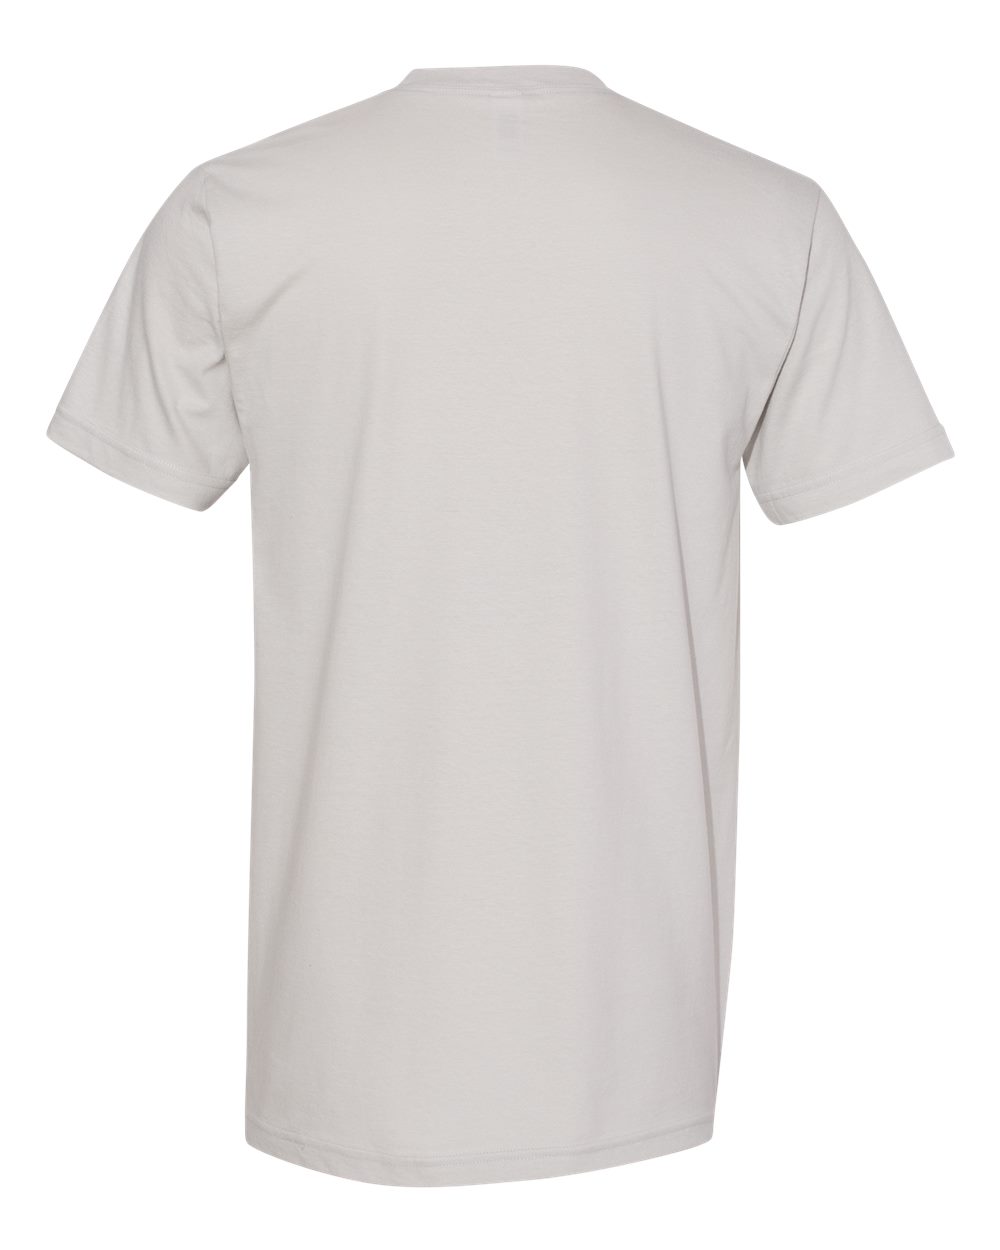 American Apparel Mens Fine Jersey Tee T Shirt Blank 2001W up to 3XL | eBay